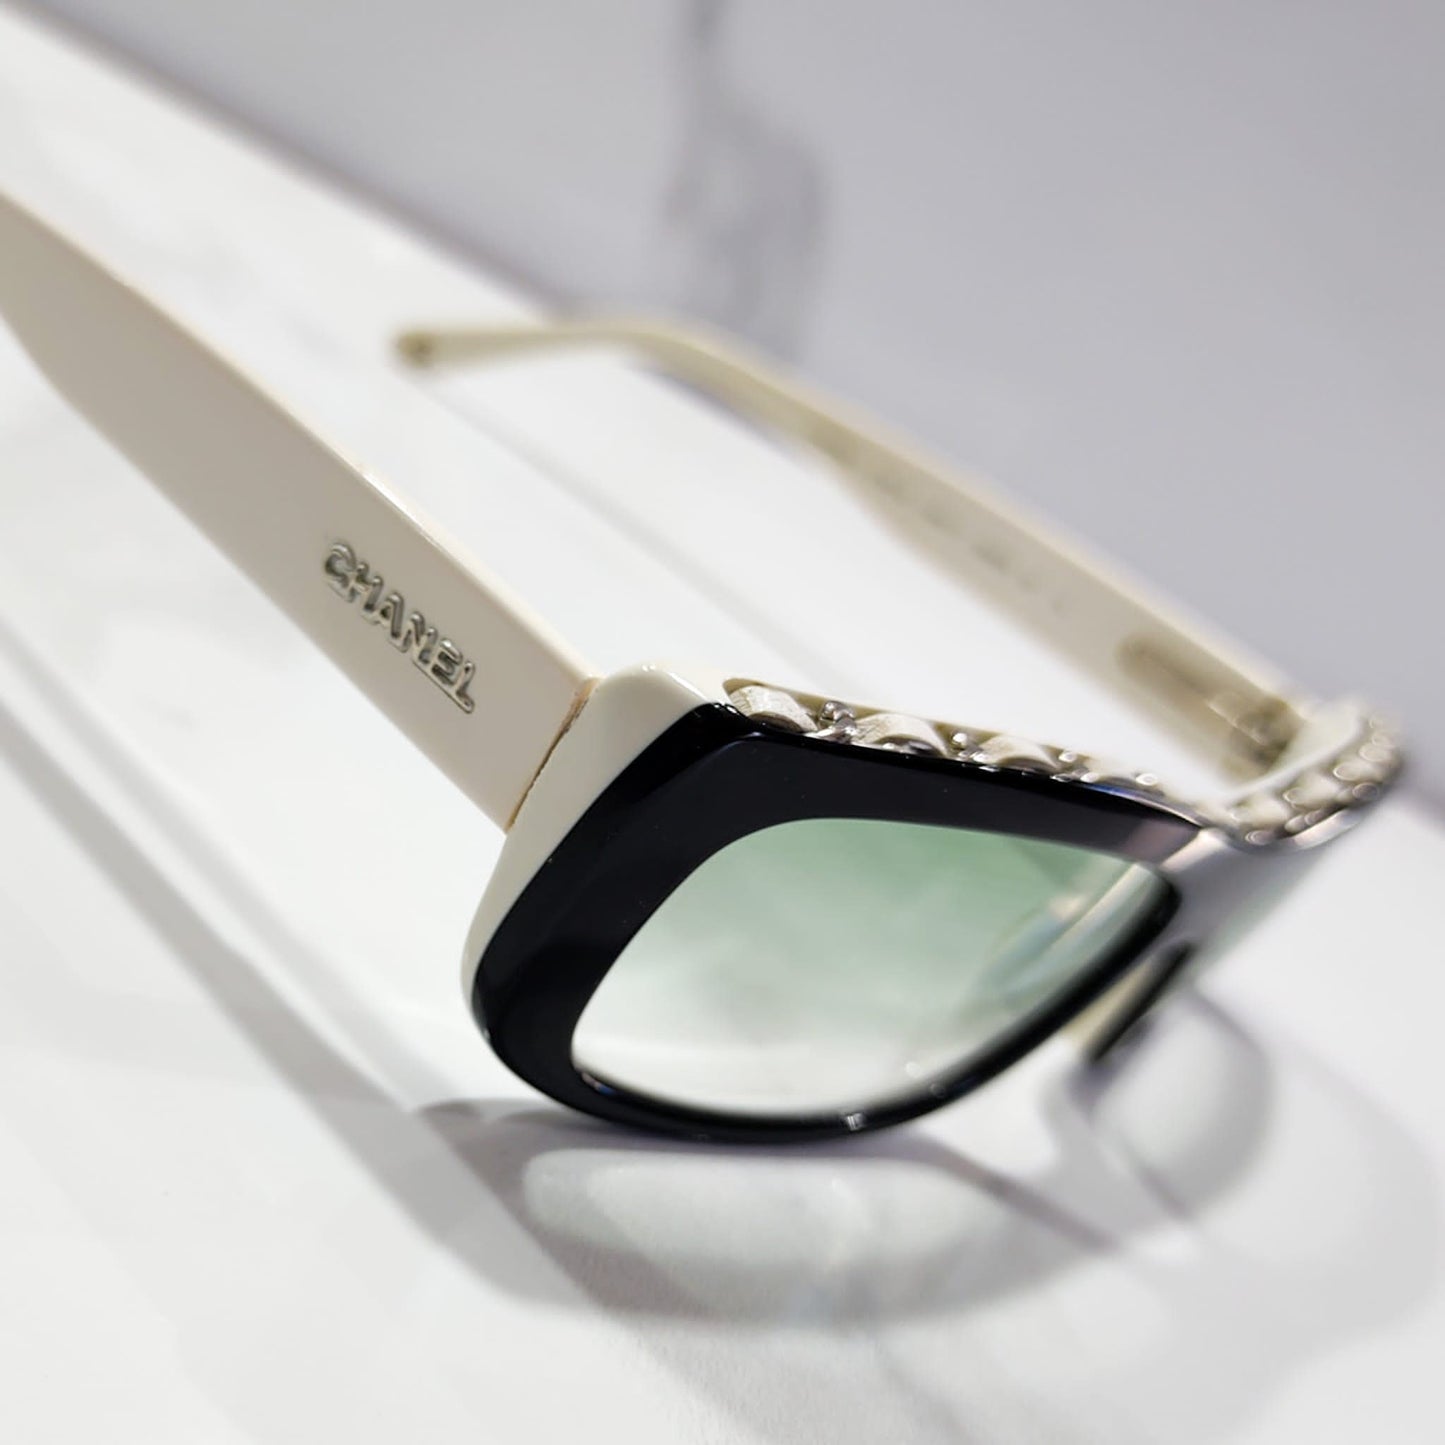 Chanel sunglasses model 5130 lunette brille y2k shades